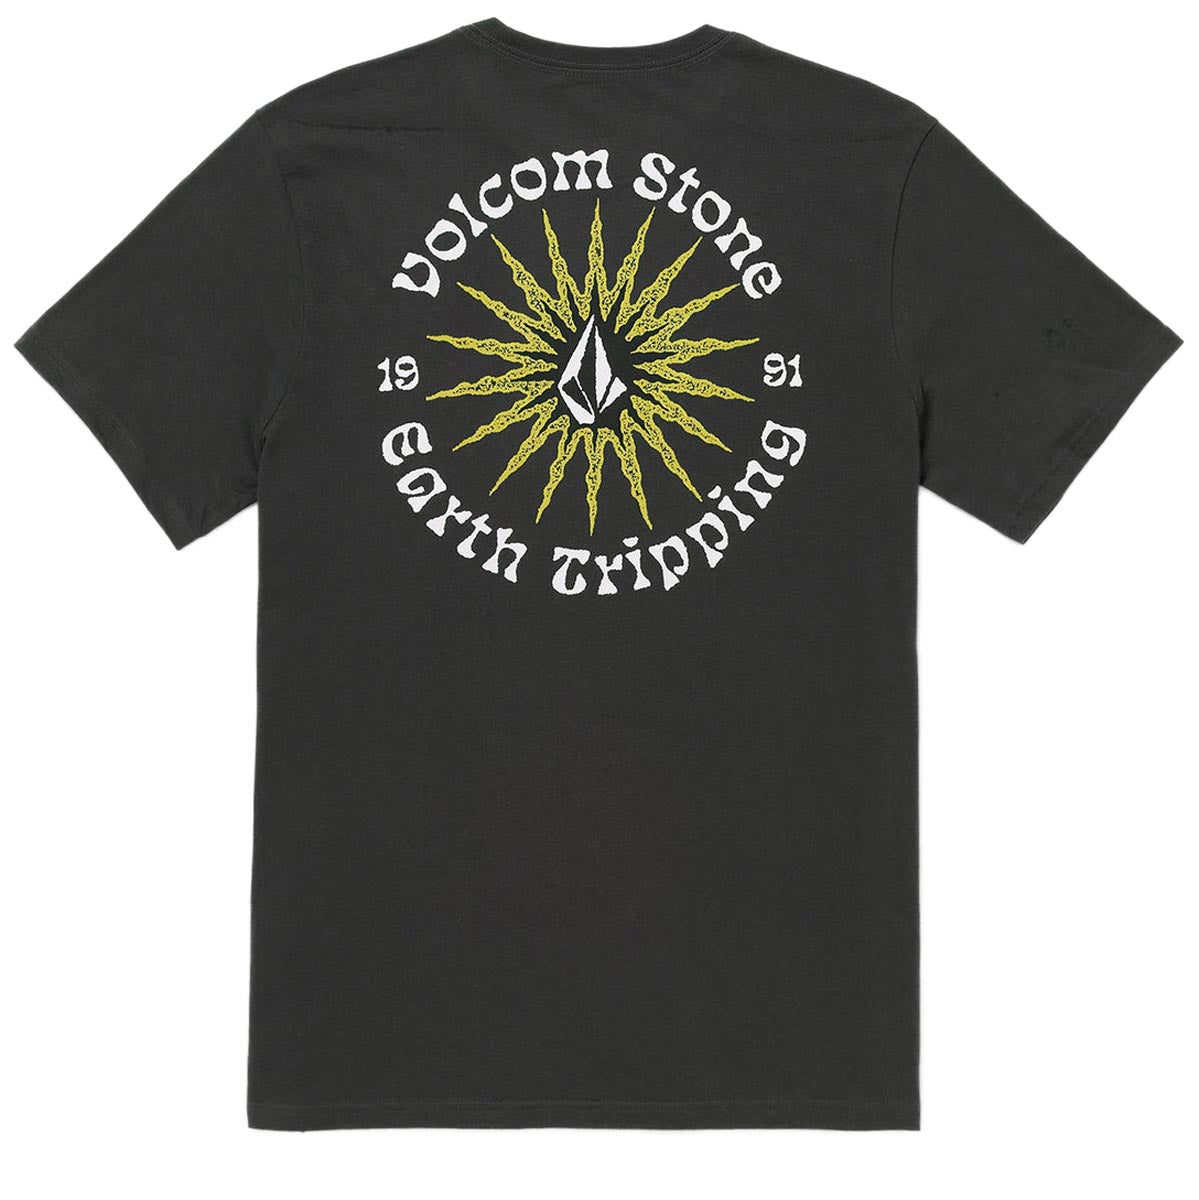 Volcom Scorcho T-Shirt - Stealth image 2